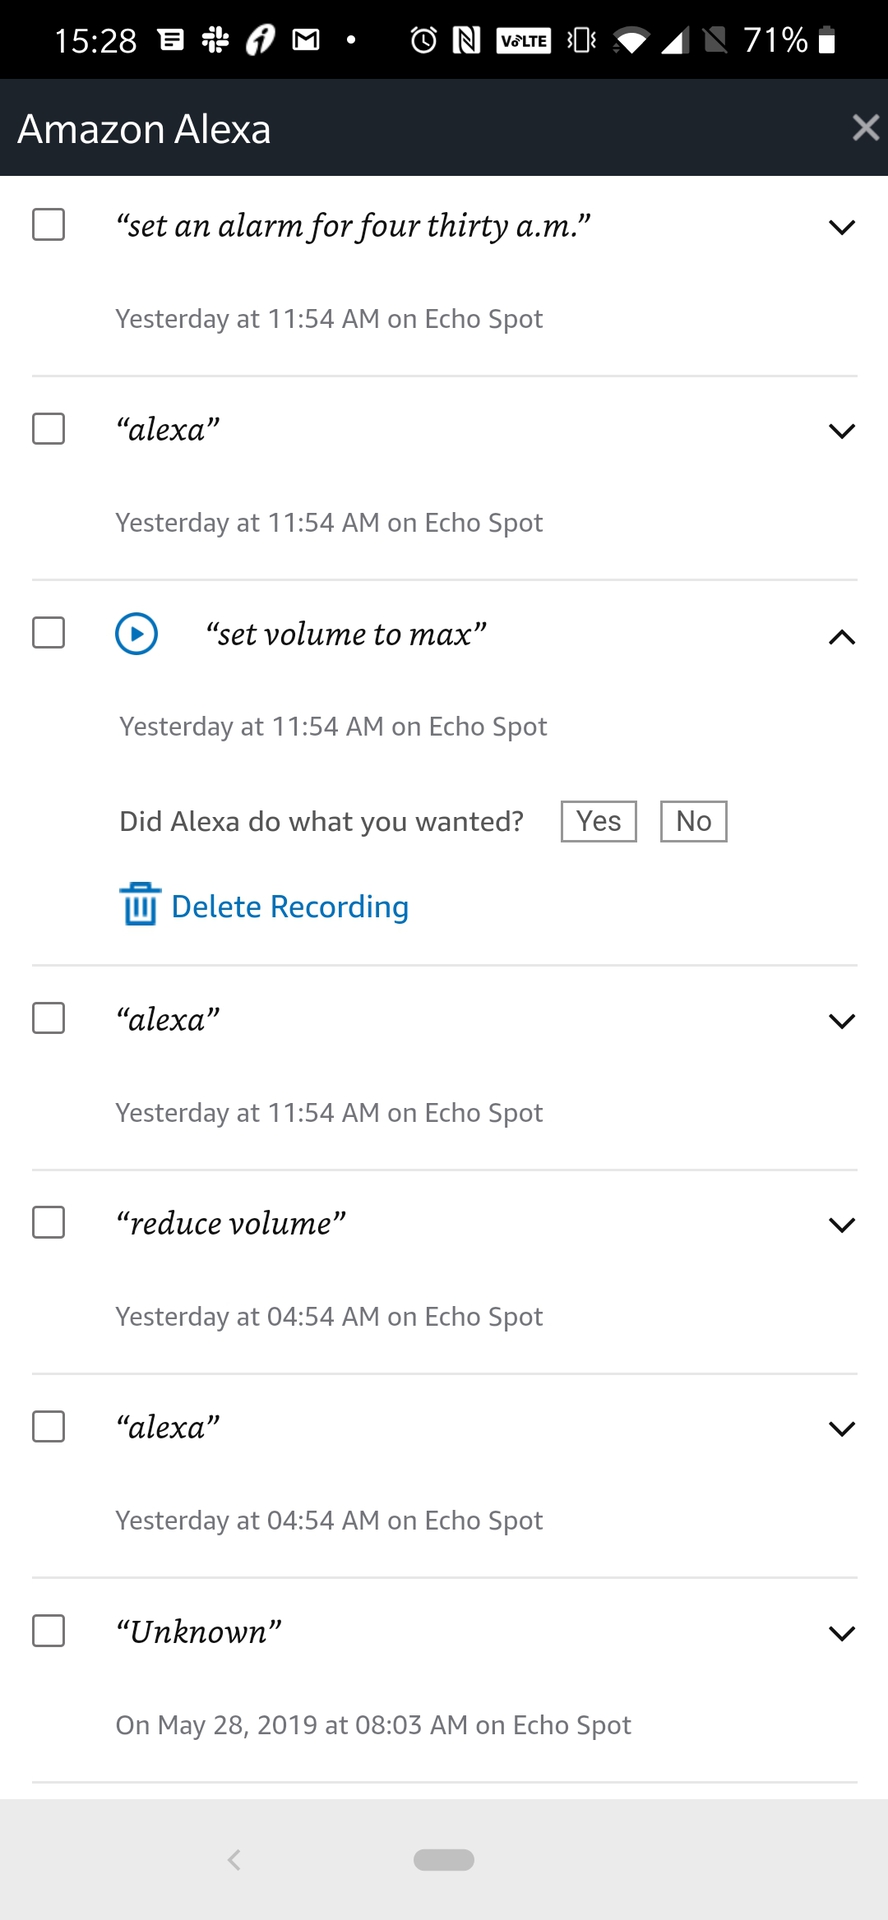 Amazon Alexa app - list of voice commands